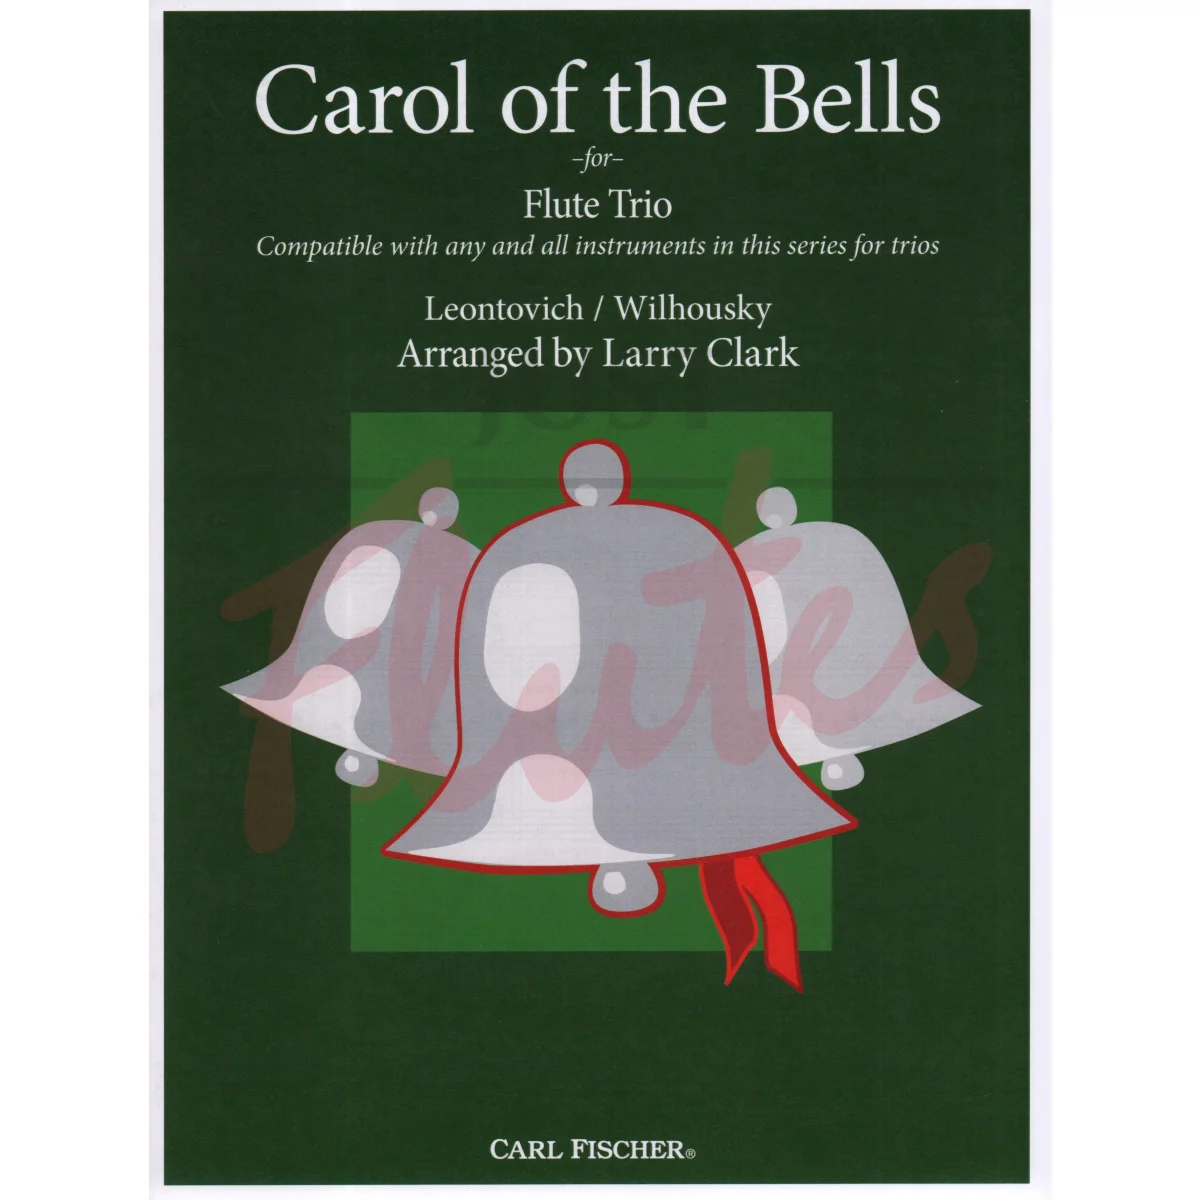 Carol of the Bells for Flute Trio